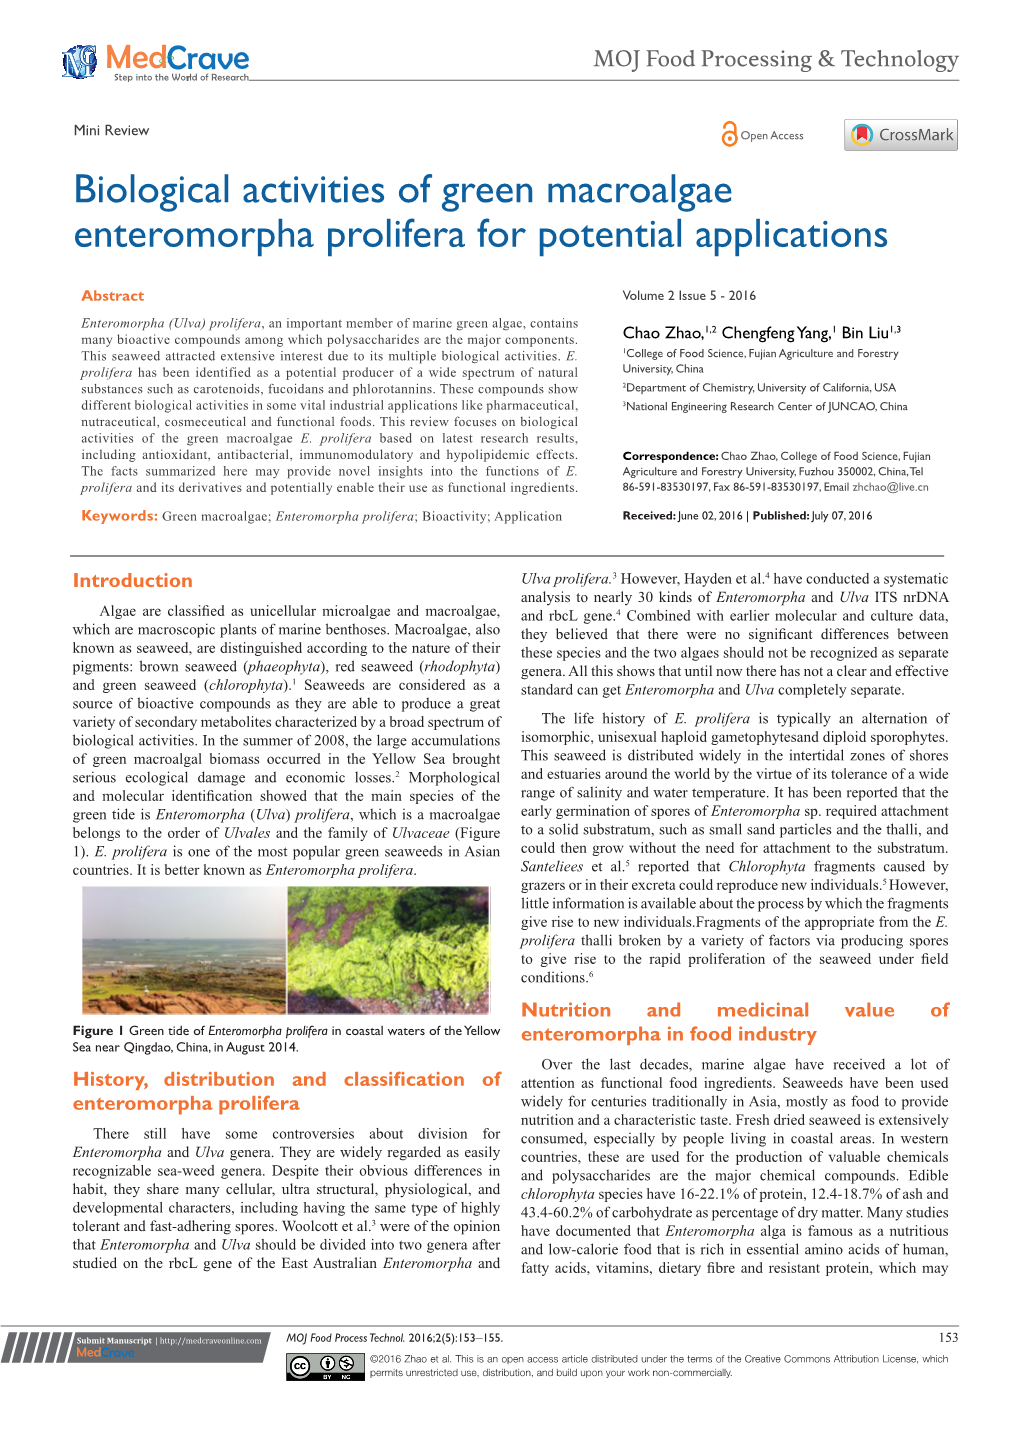 Biological Activities of Green Macroalgae Enteromorpha Prolifera for Potential Applications